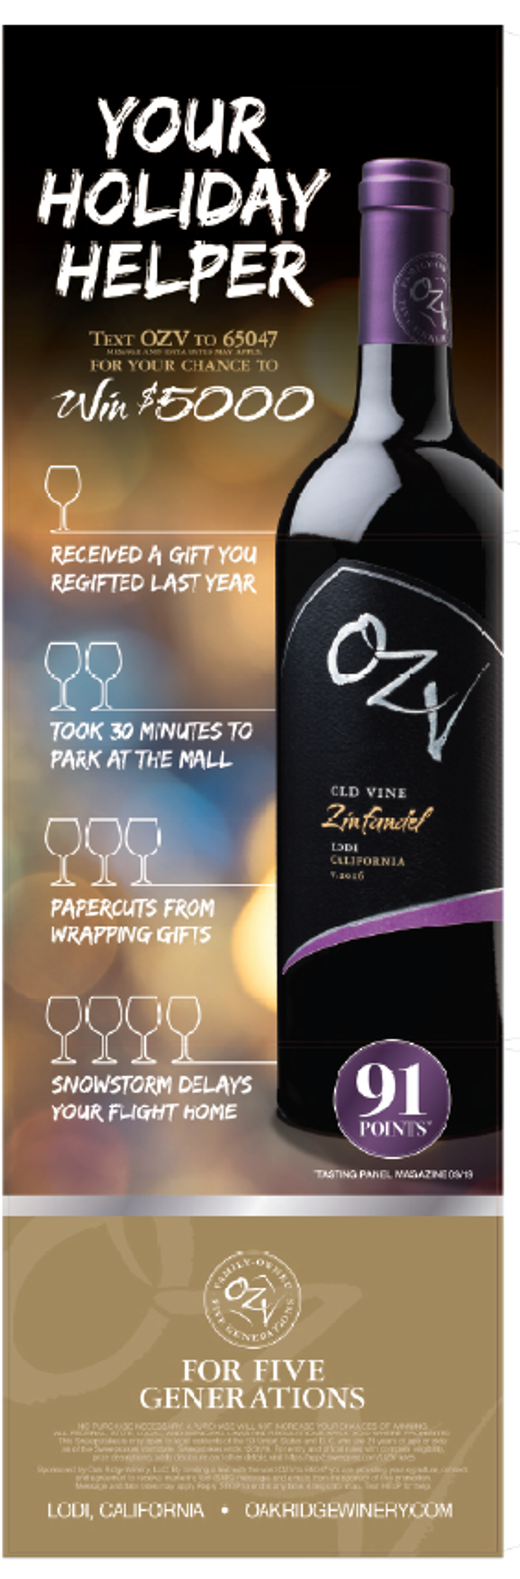 Oak Ridge Winery Text To Win Sweepstakes - Display